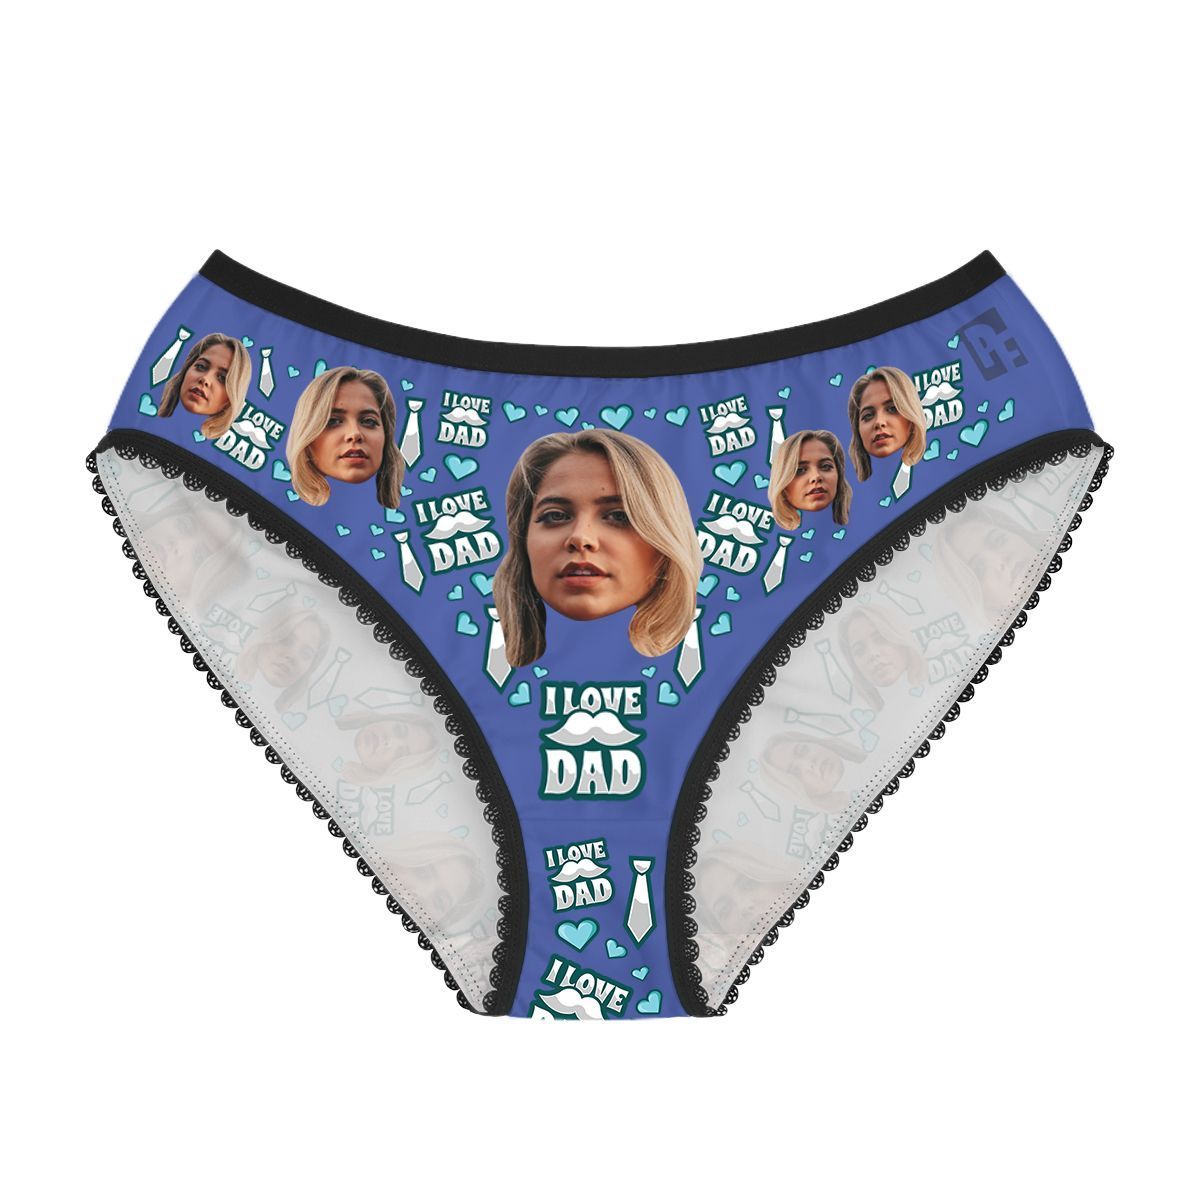 Darkblue Love dad women's underwear briefs personalized with photo printed on them